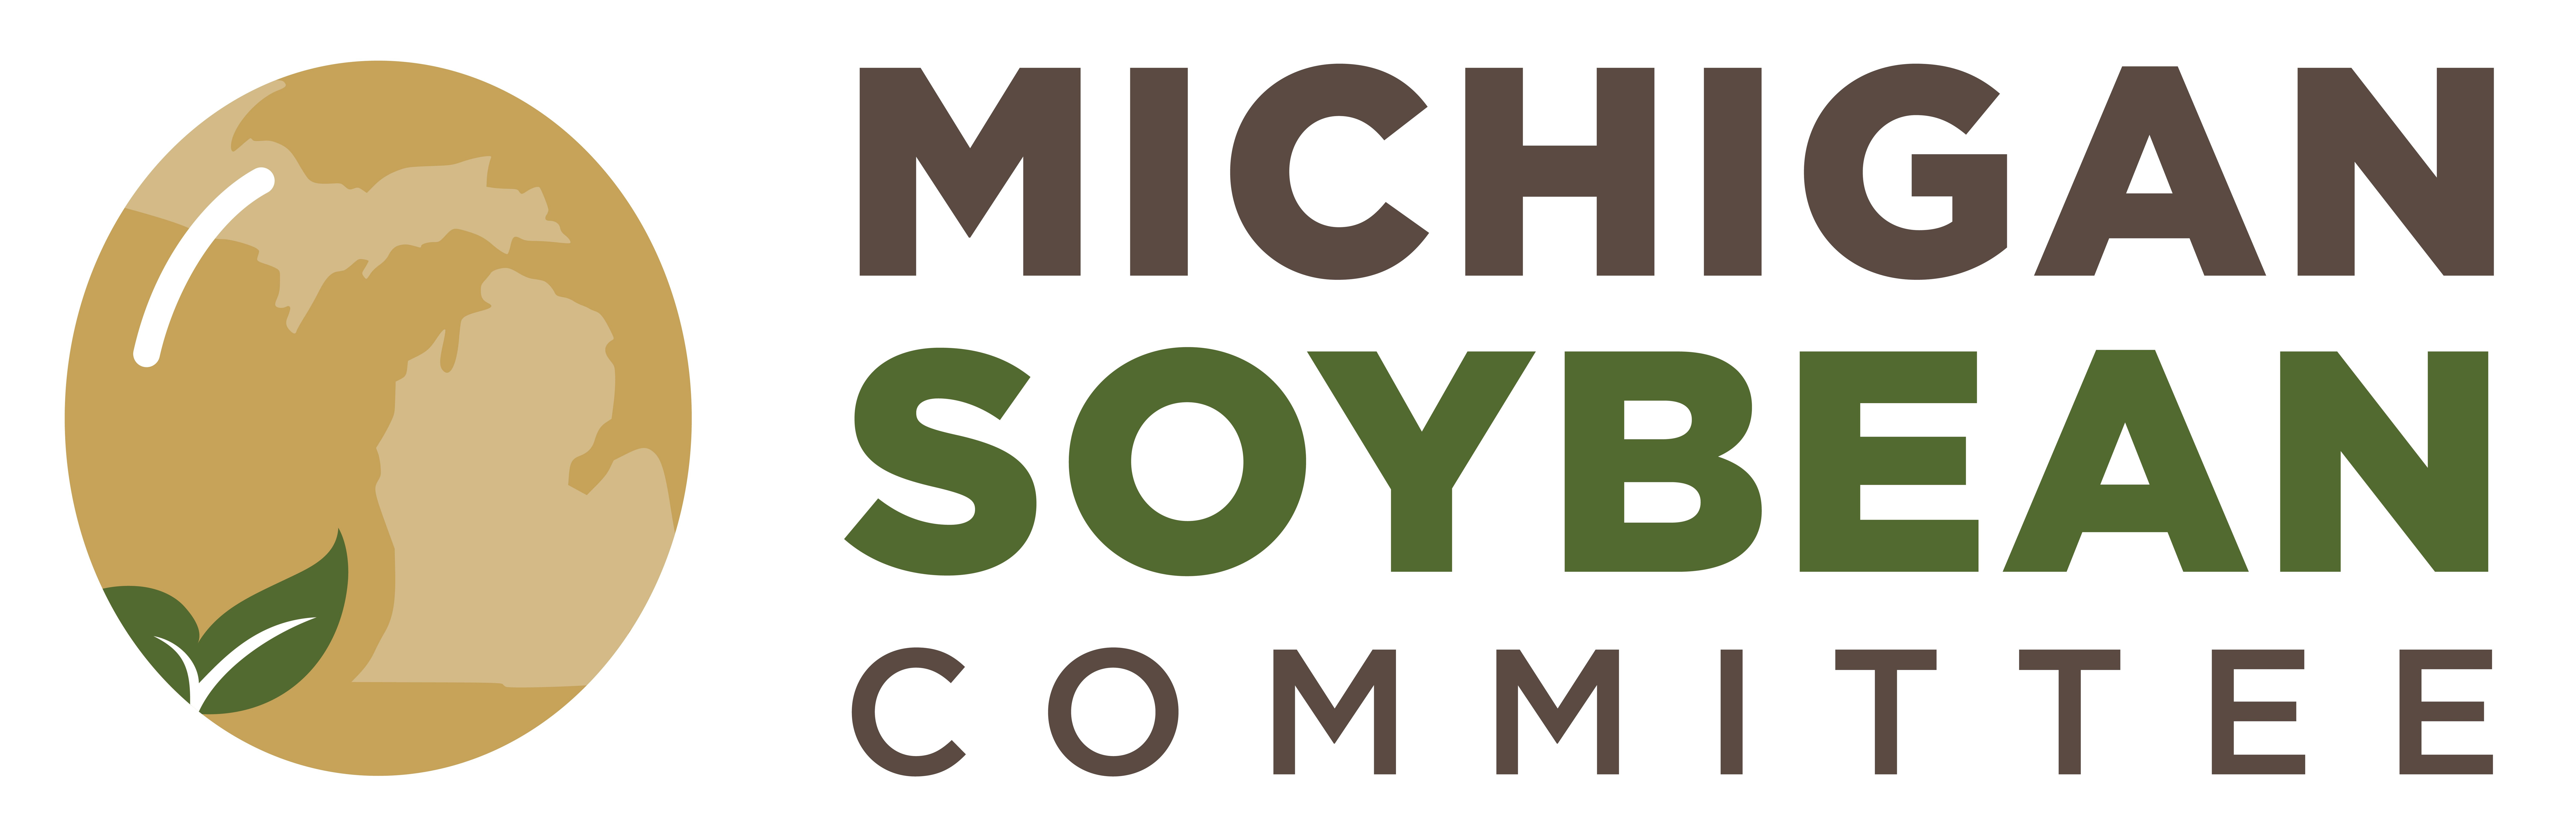 Link to Michigan Soybean Committee website